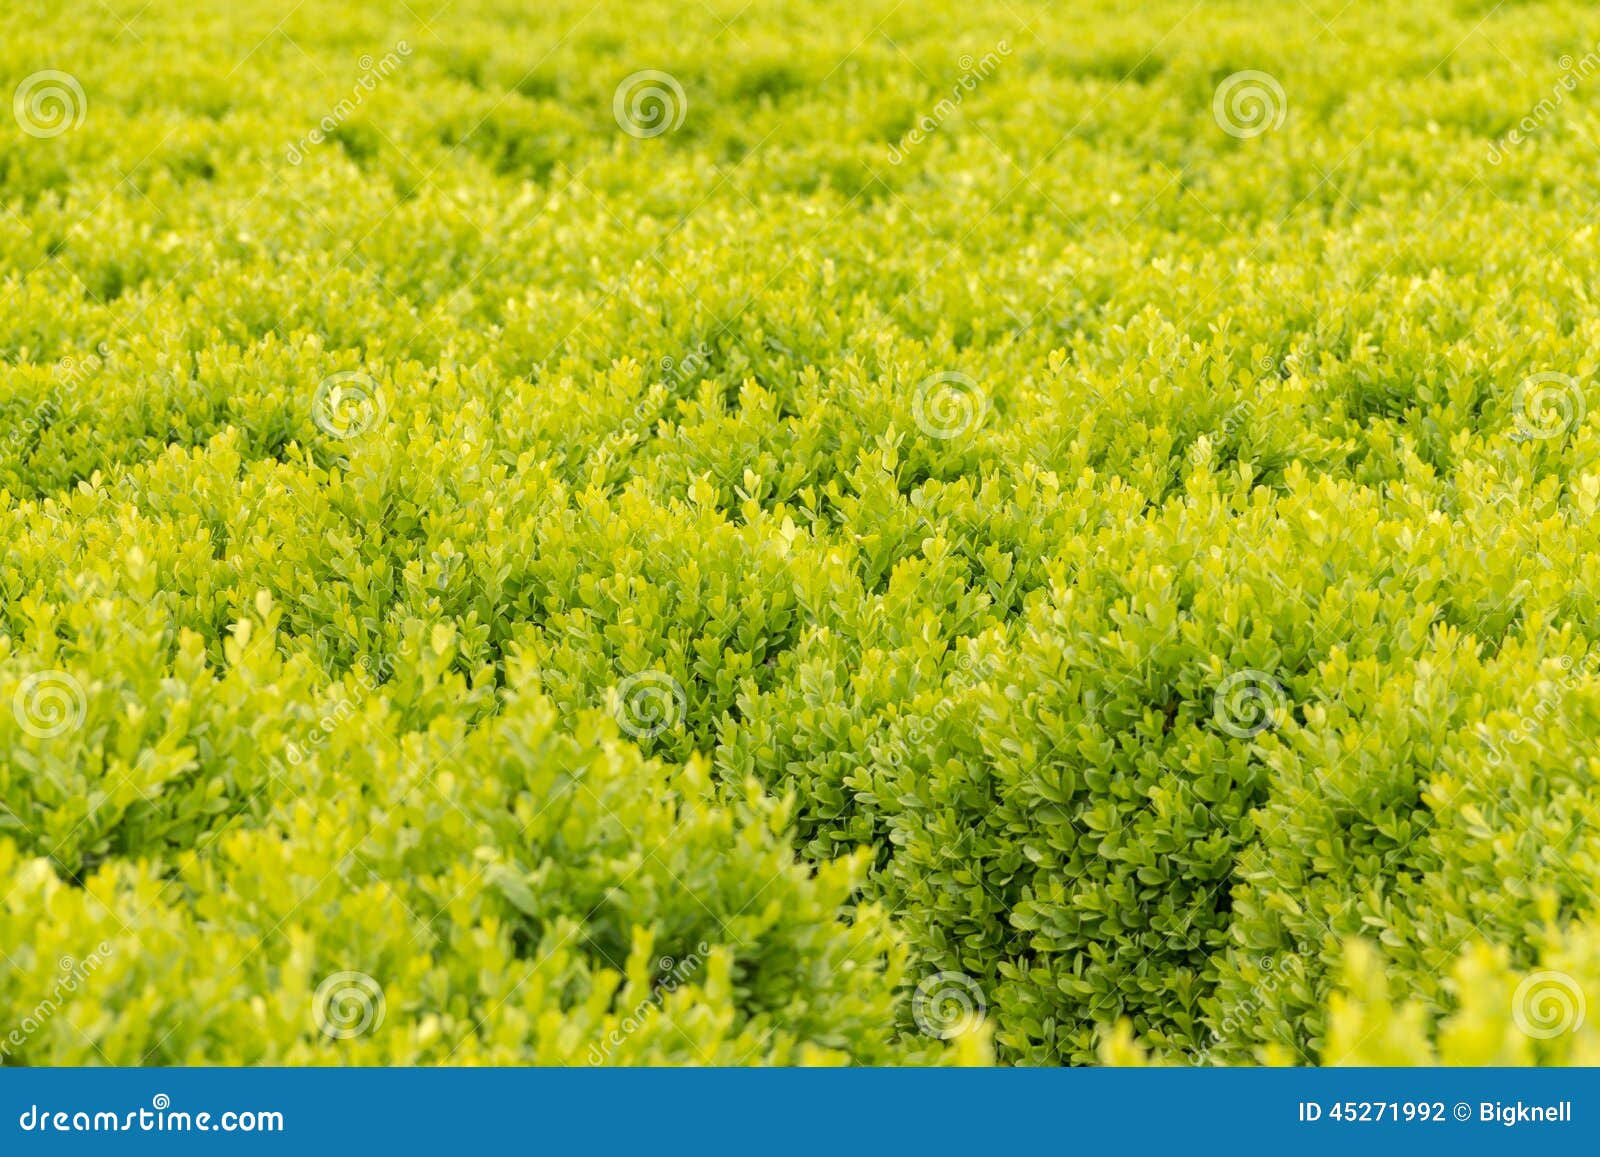 Green carpet stock photo. Image of spring, nature, closeup - 45271992